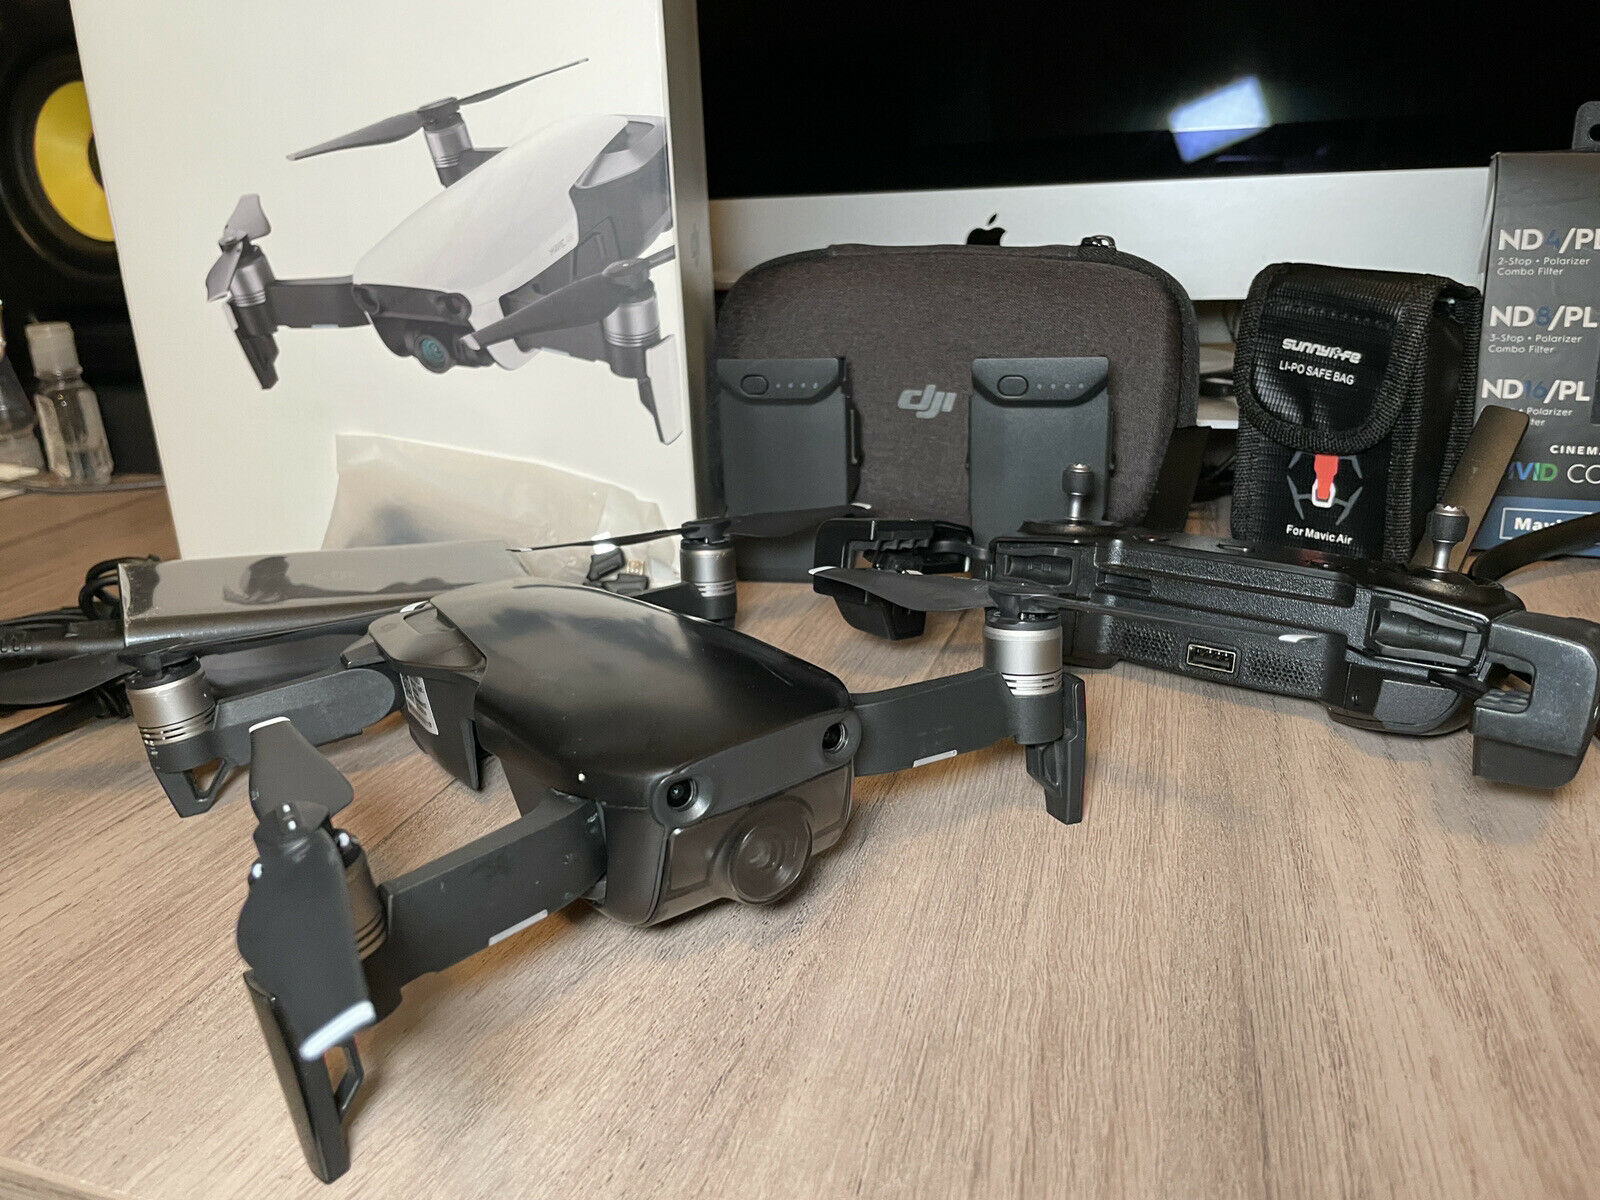 Dji mavic air camera drone - onyx black plus 2 batteries